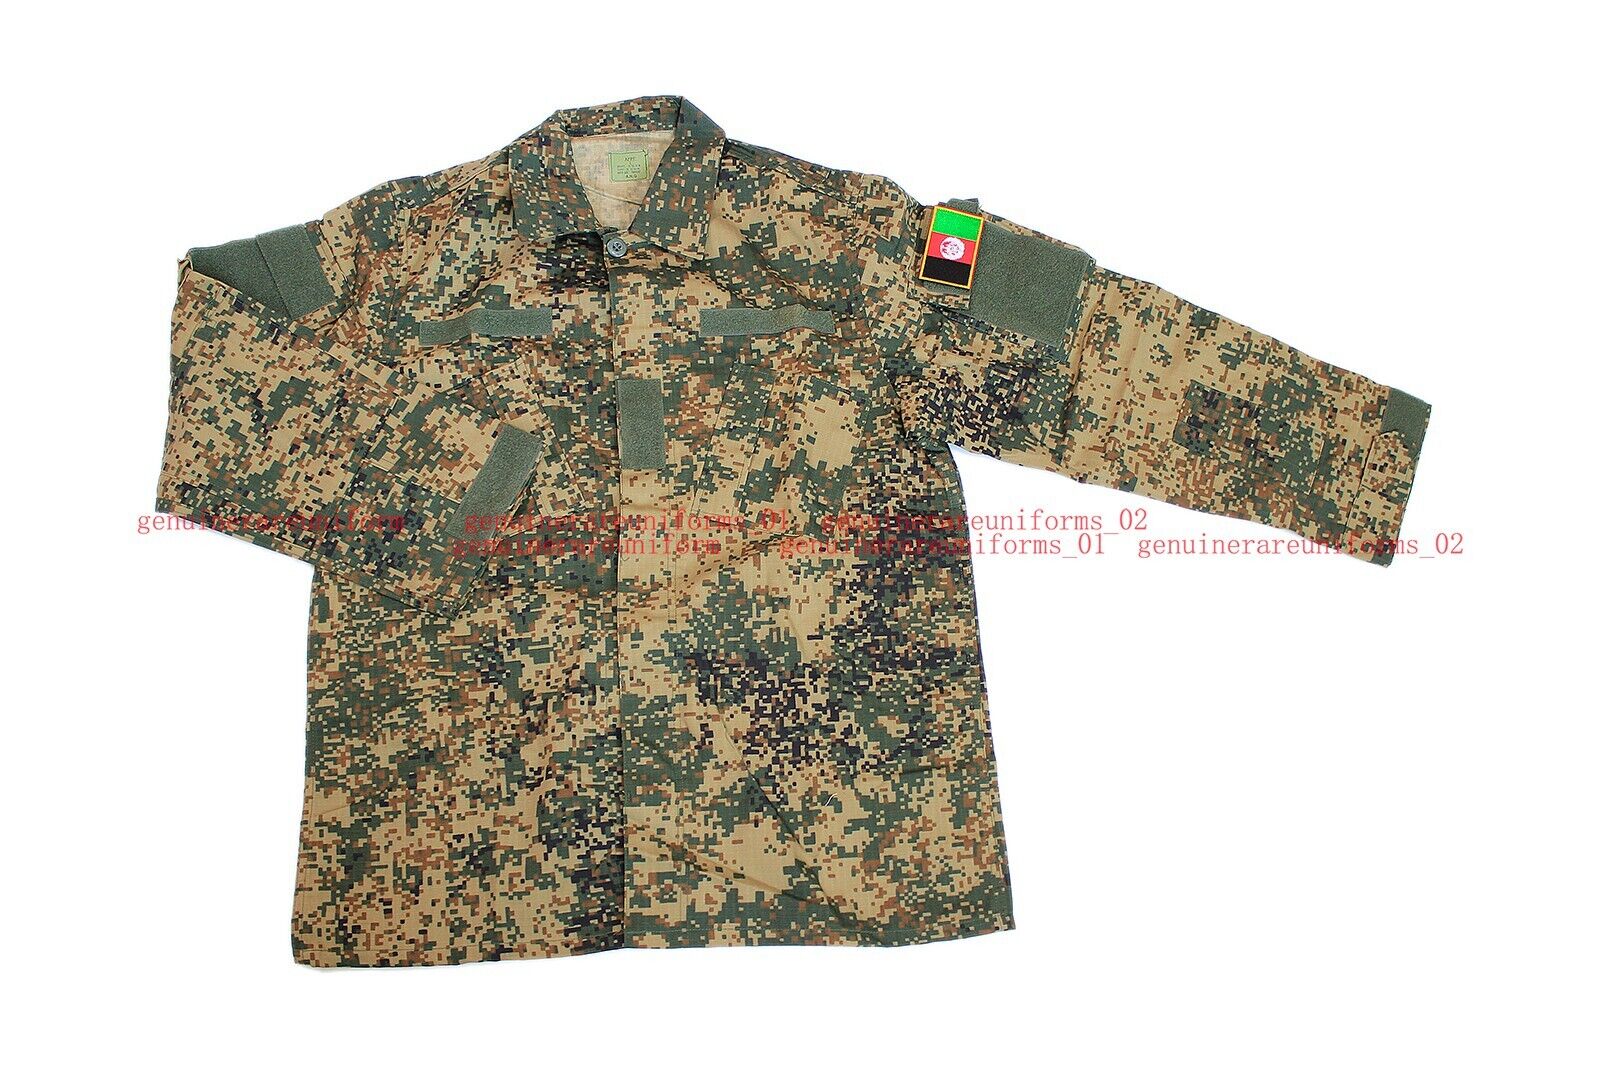 Rare Genuine Afghan Public Police Force Digital Camo BDU Uniform Shirt US MEDIUM